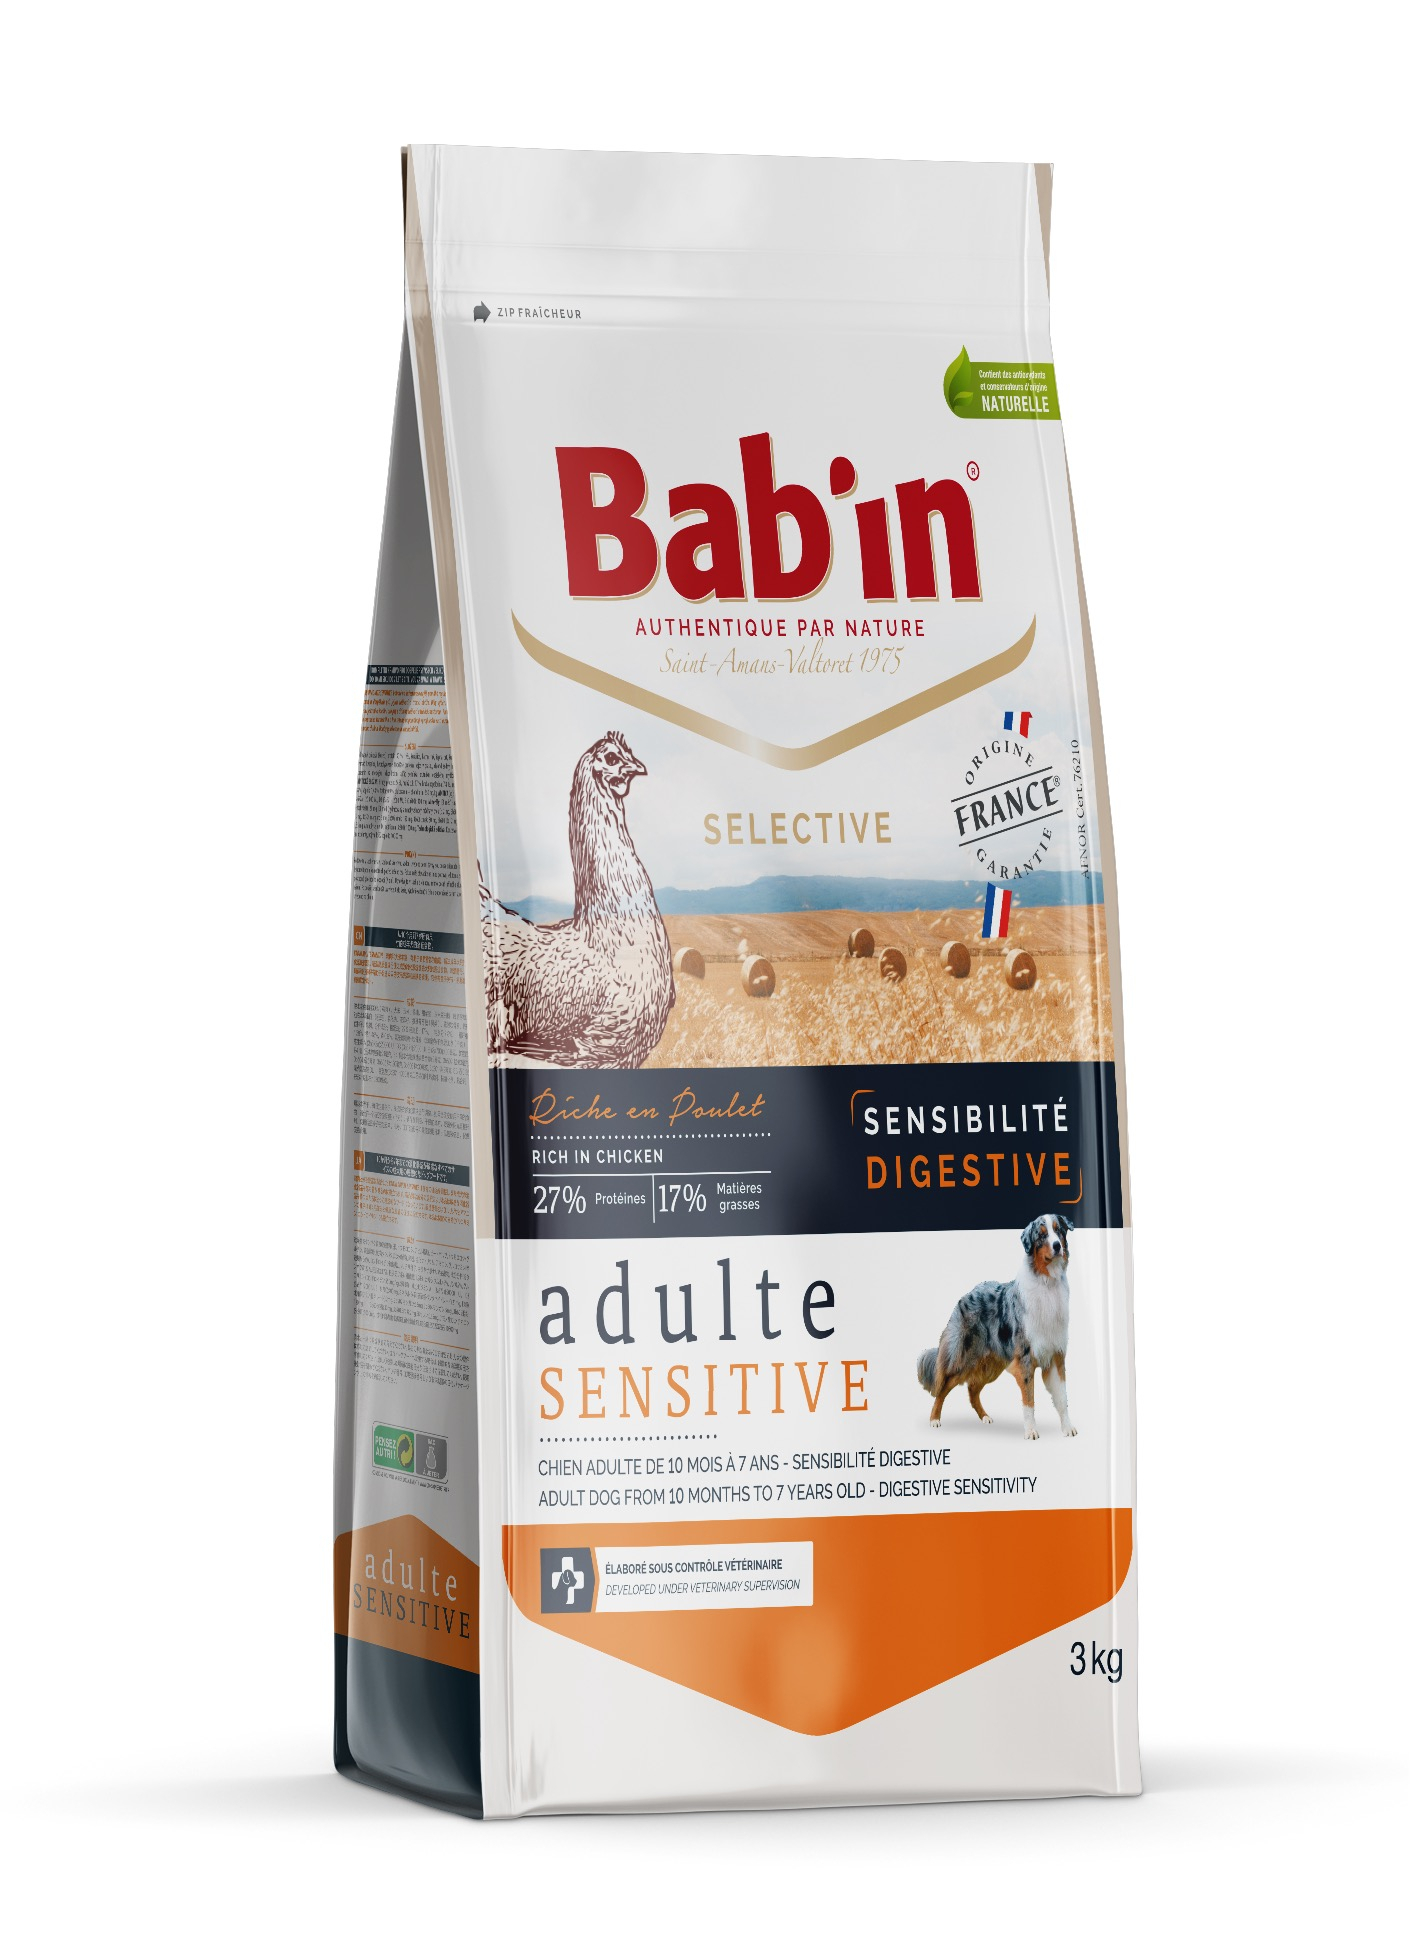 BAB'IN Selective Adulte Sensitive Digestive Pollo para perros sensibles